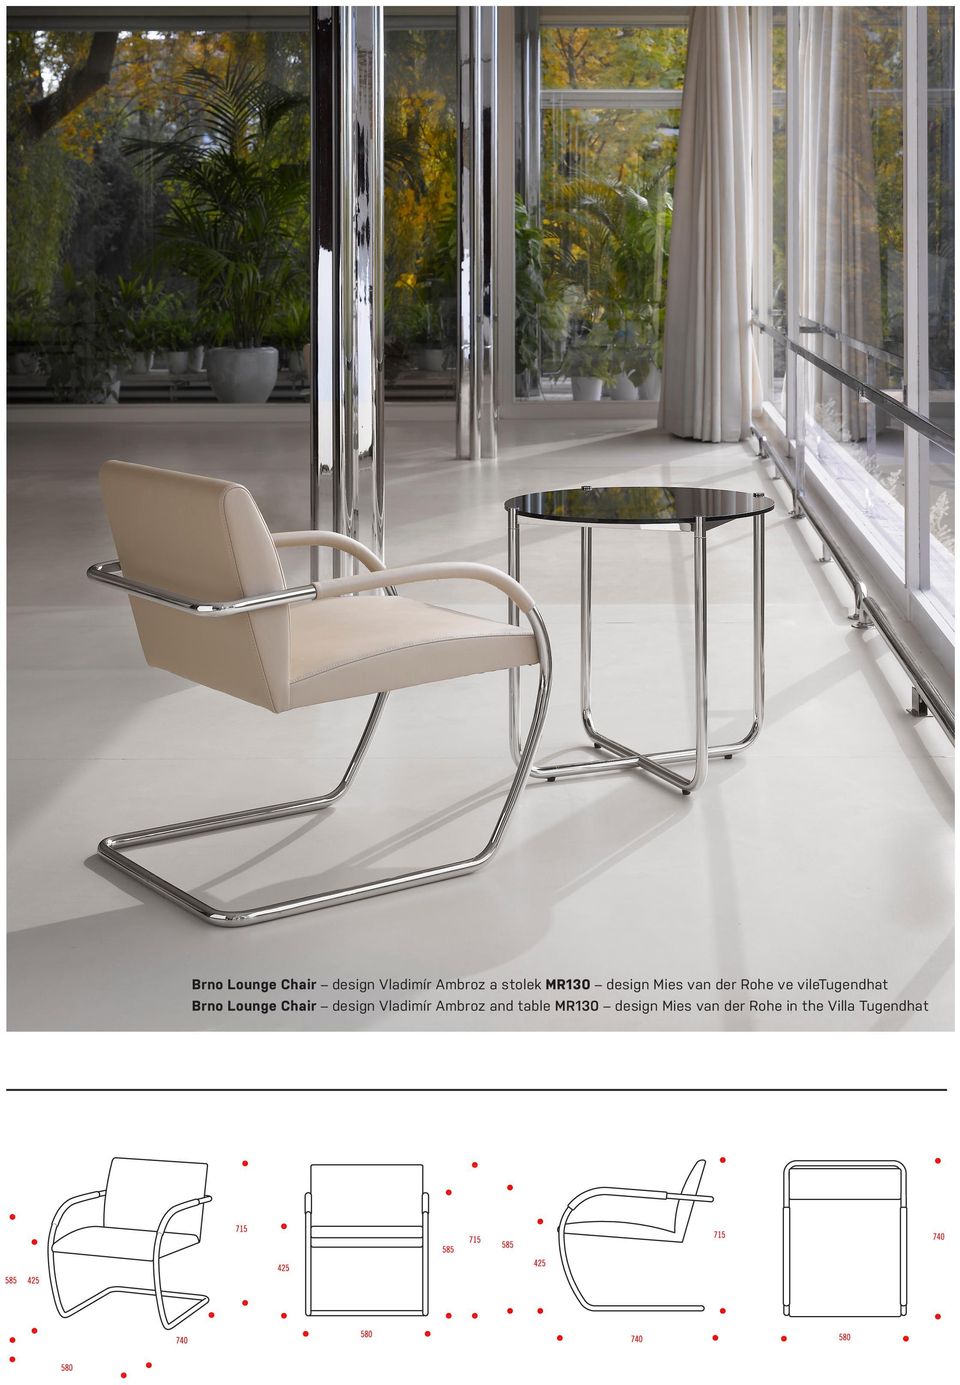 Brno Lounge Chair design Vladimír Ambroz and table